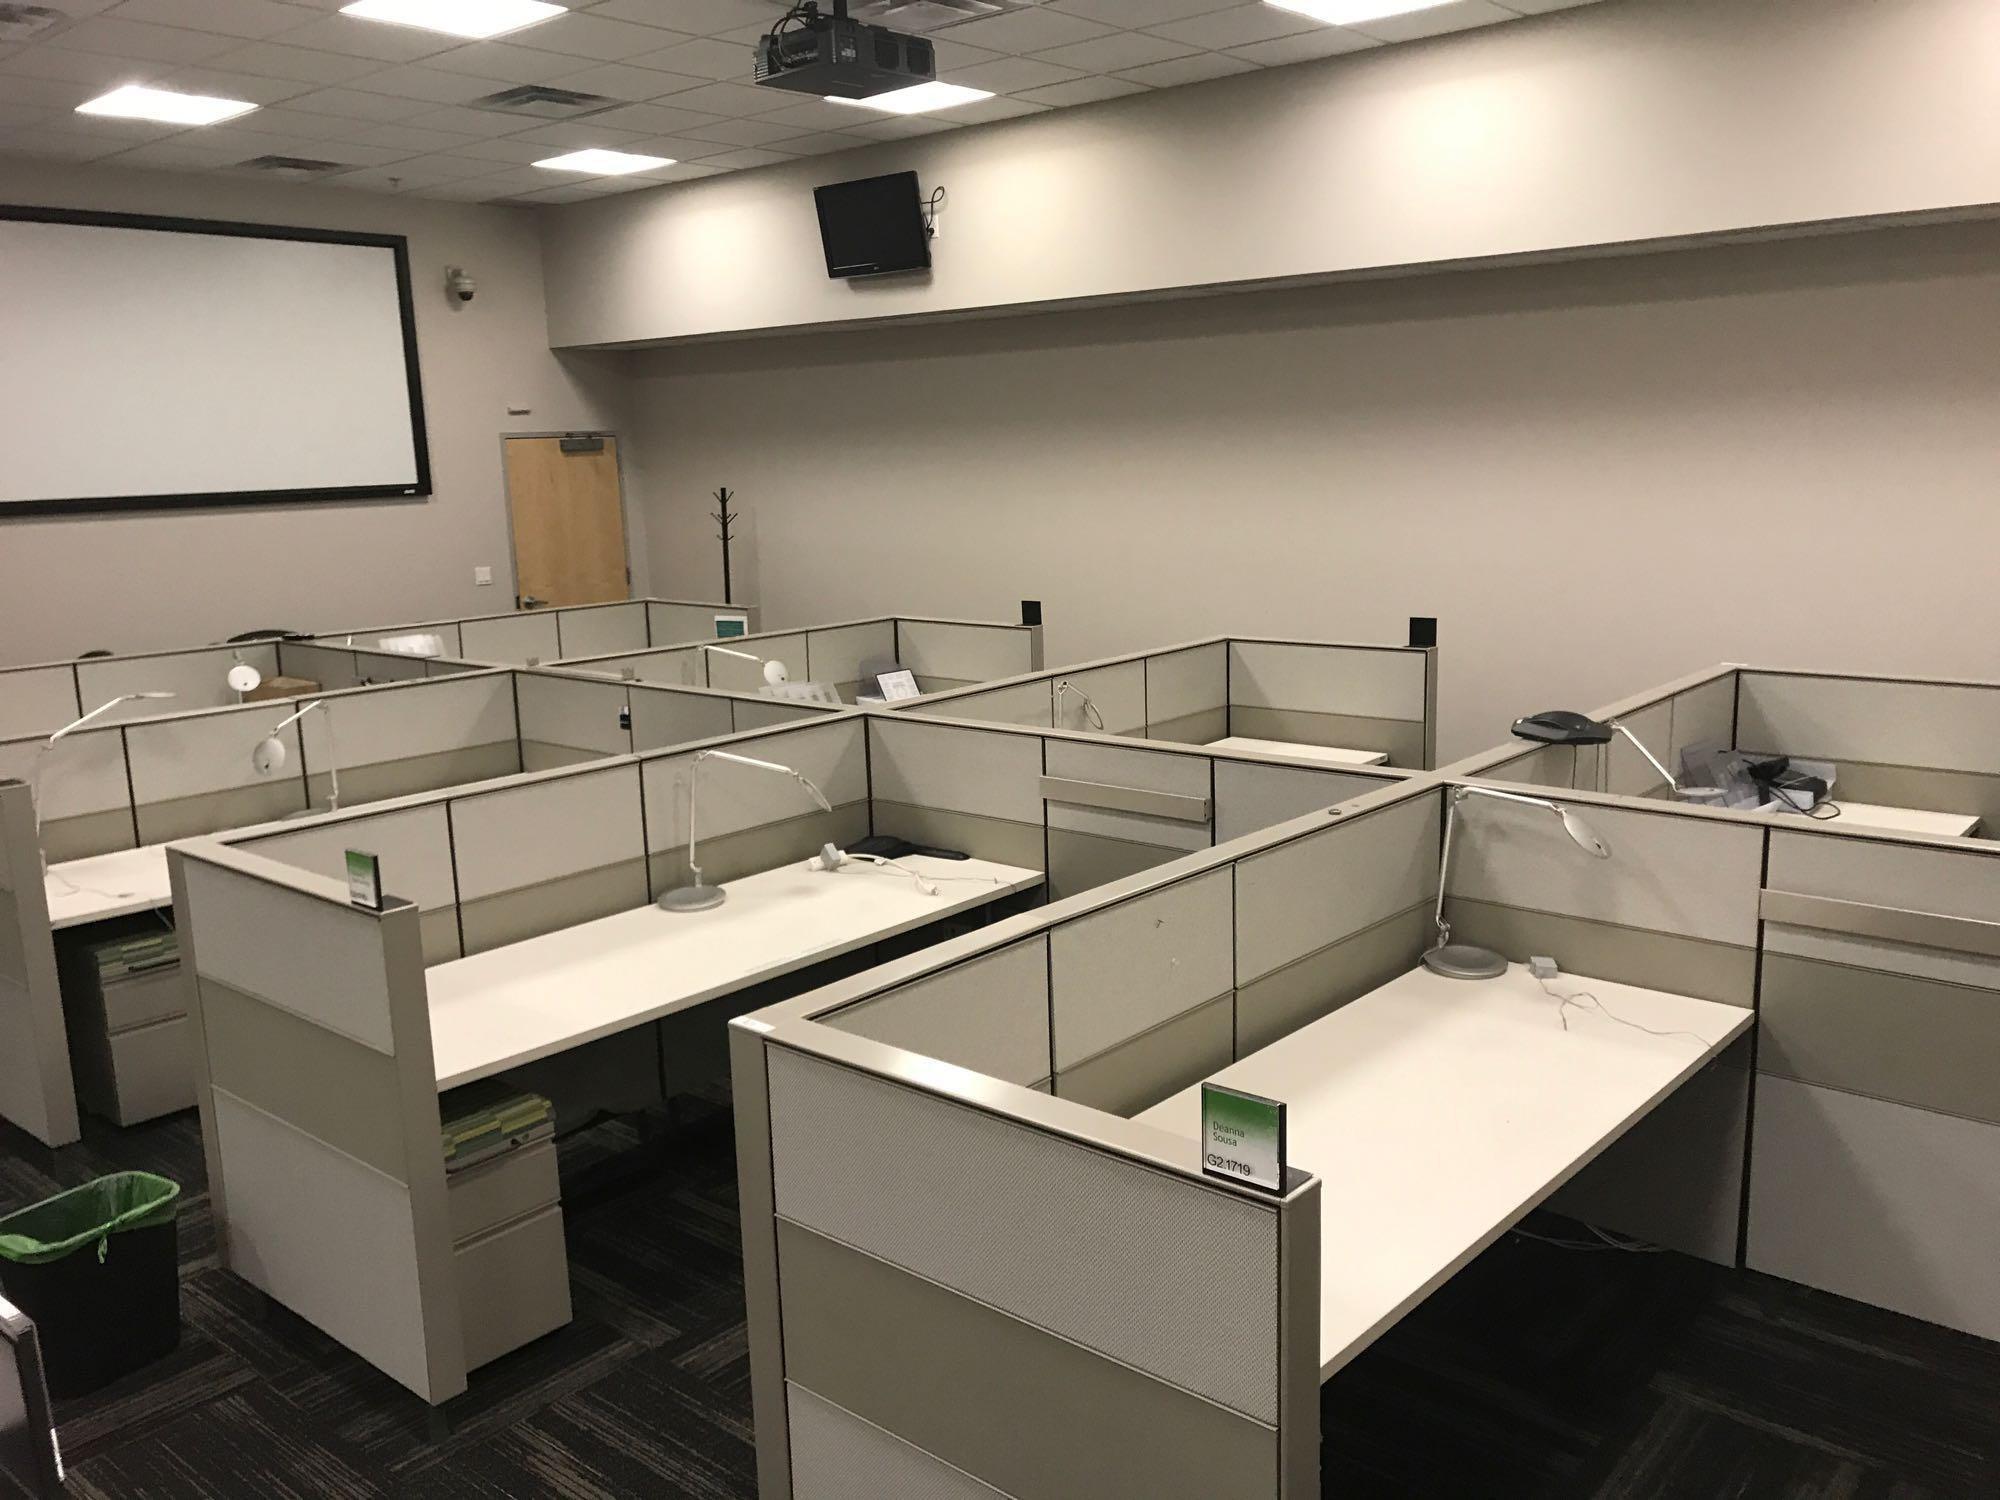 12 desk cubicle system with 1 Ergotron sit-stand integrated platform